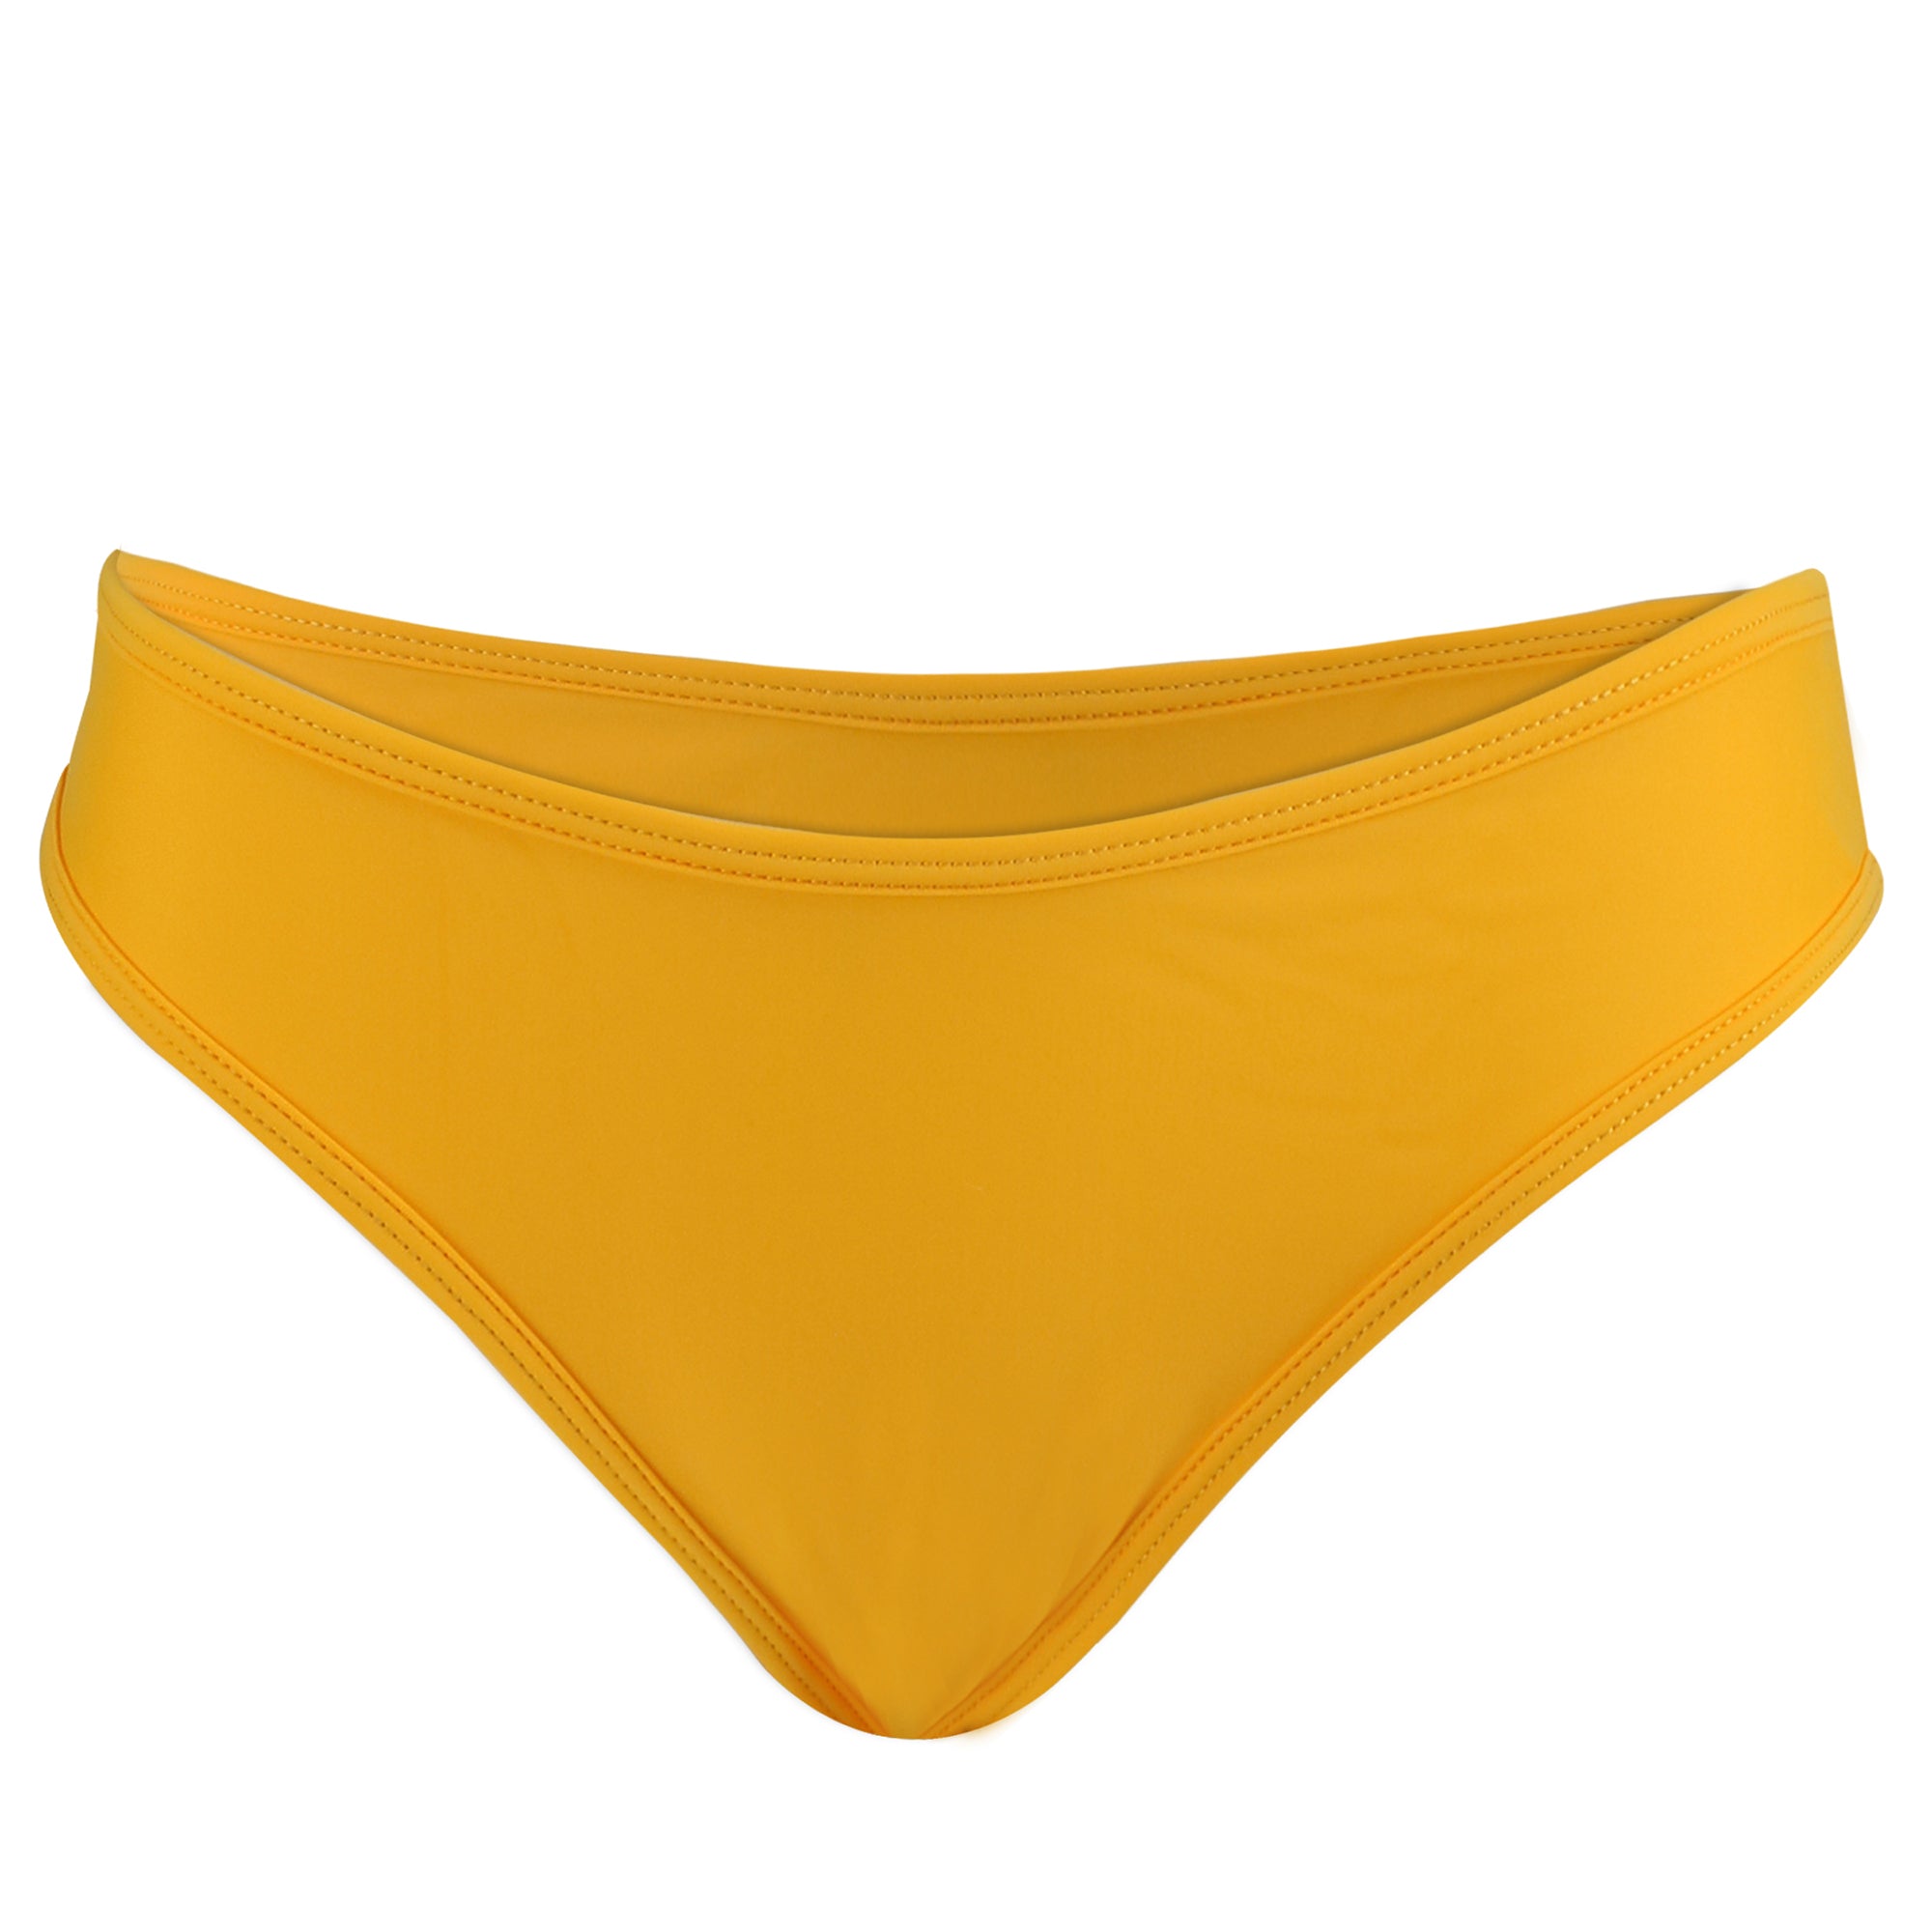 Venice Beach Bottoms x Sun-Kissed Orange - Siesta Key Bikinis 